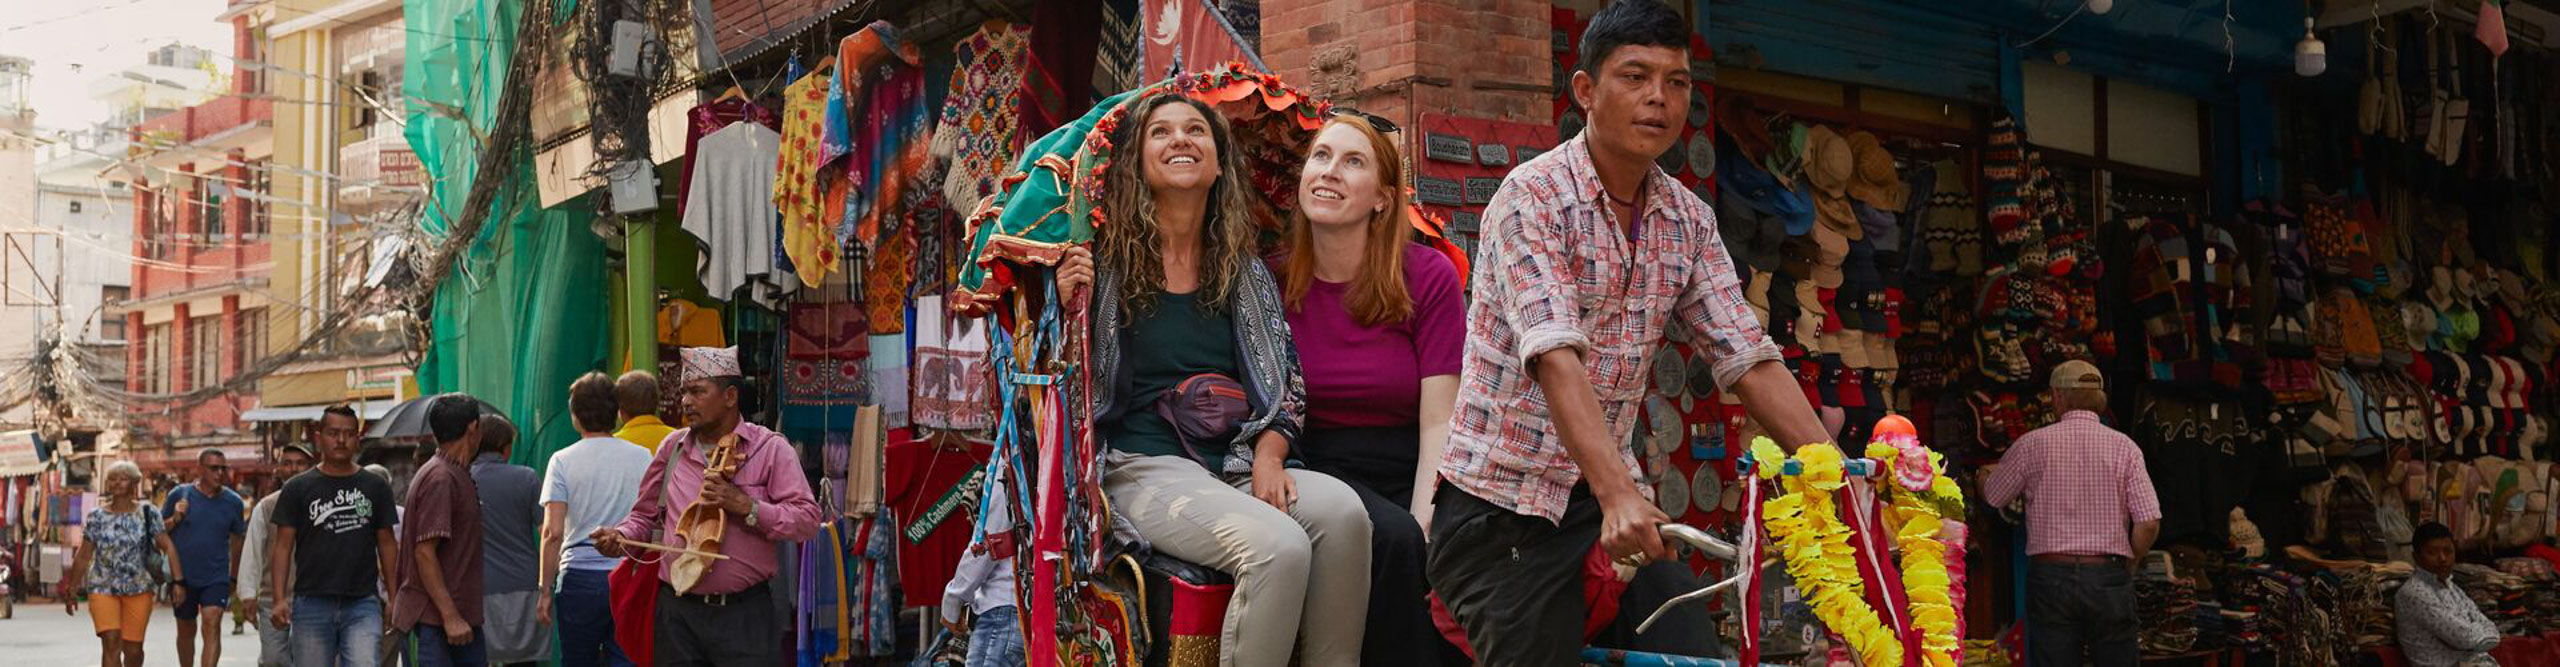 Women on colourful tuk tuk ricin through Katmandu, Nepal 